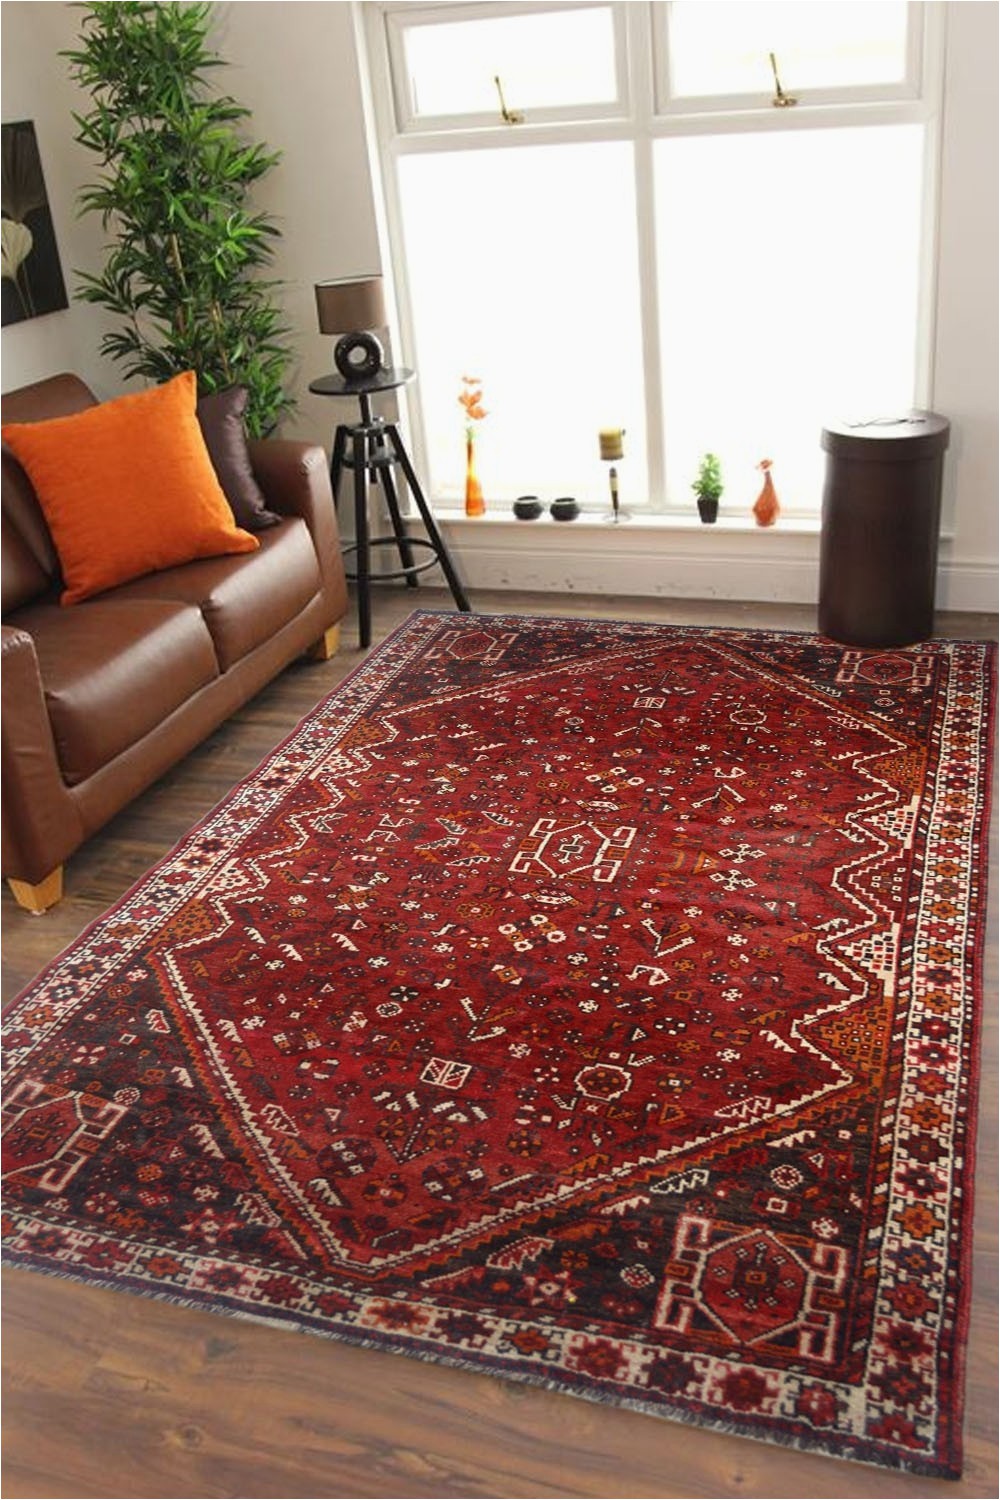 open afghani red vintage antique carpet decor vintage rug rugs and beyond